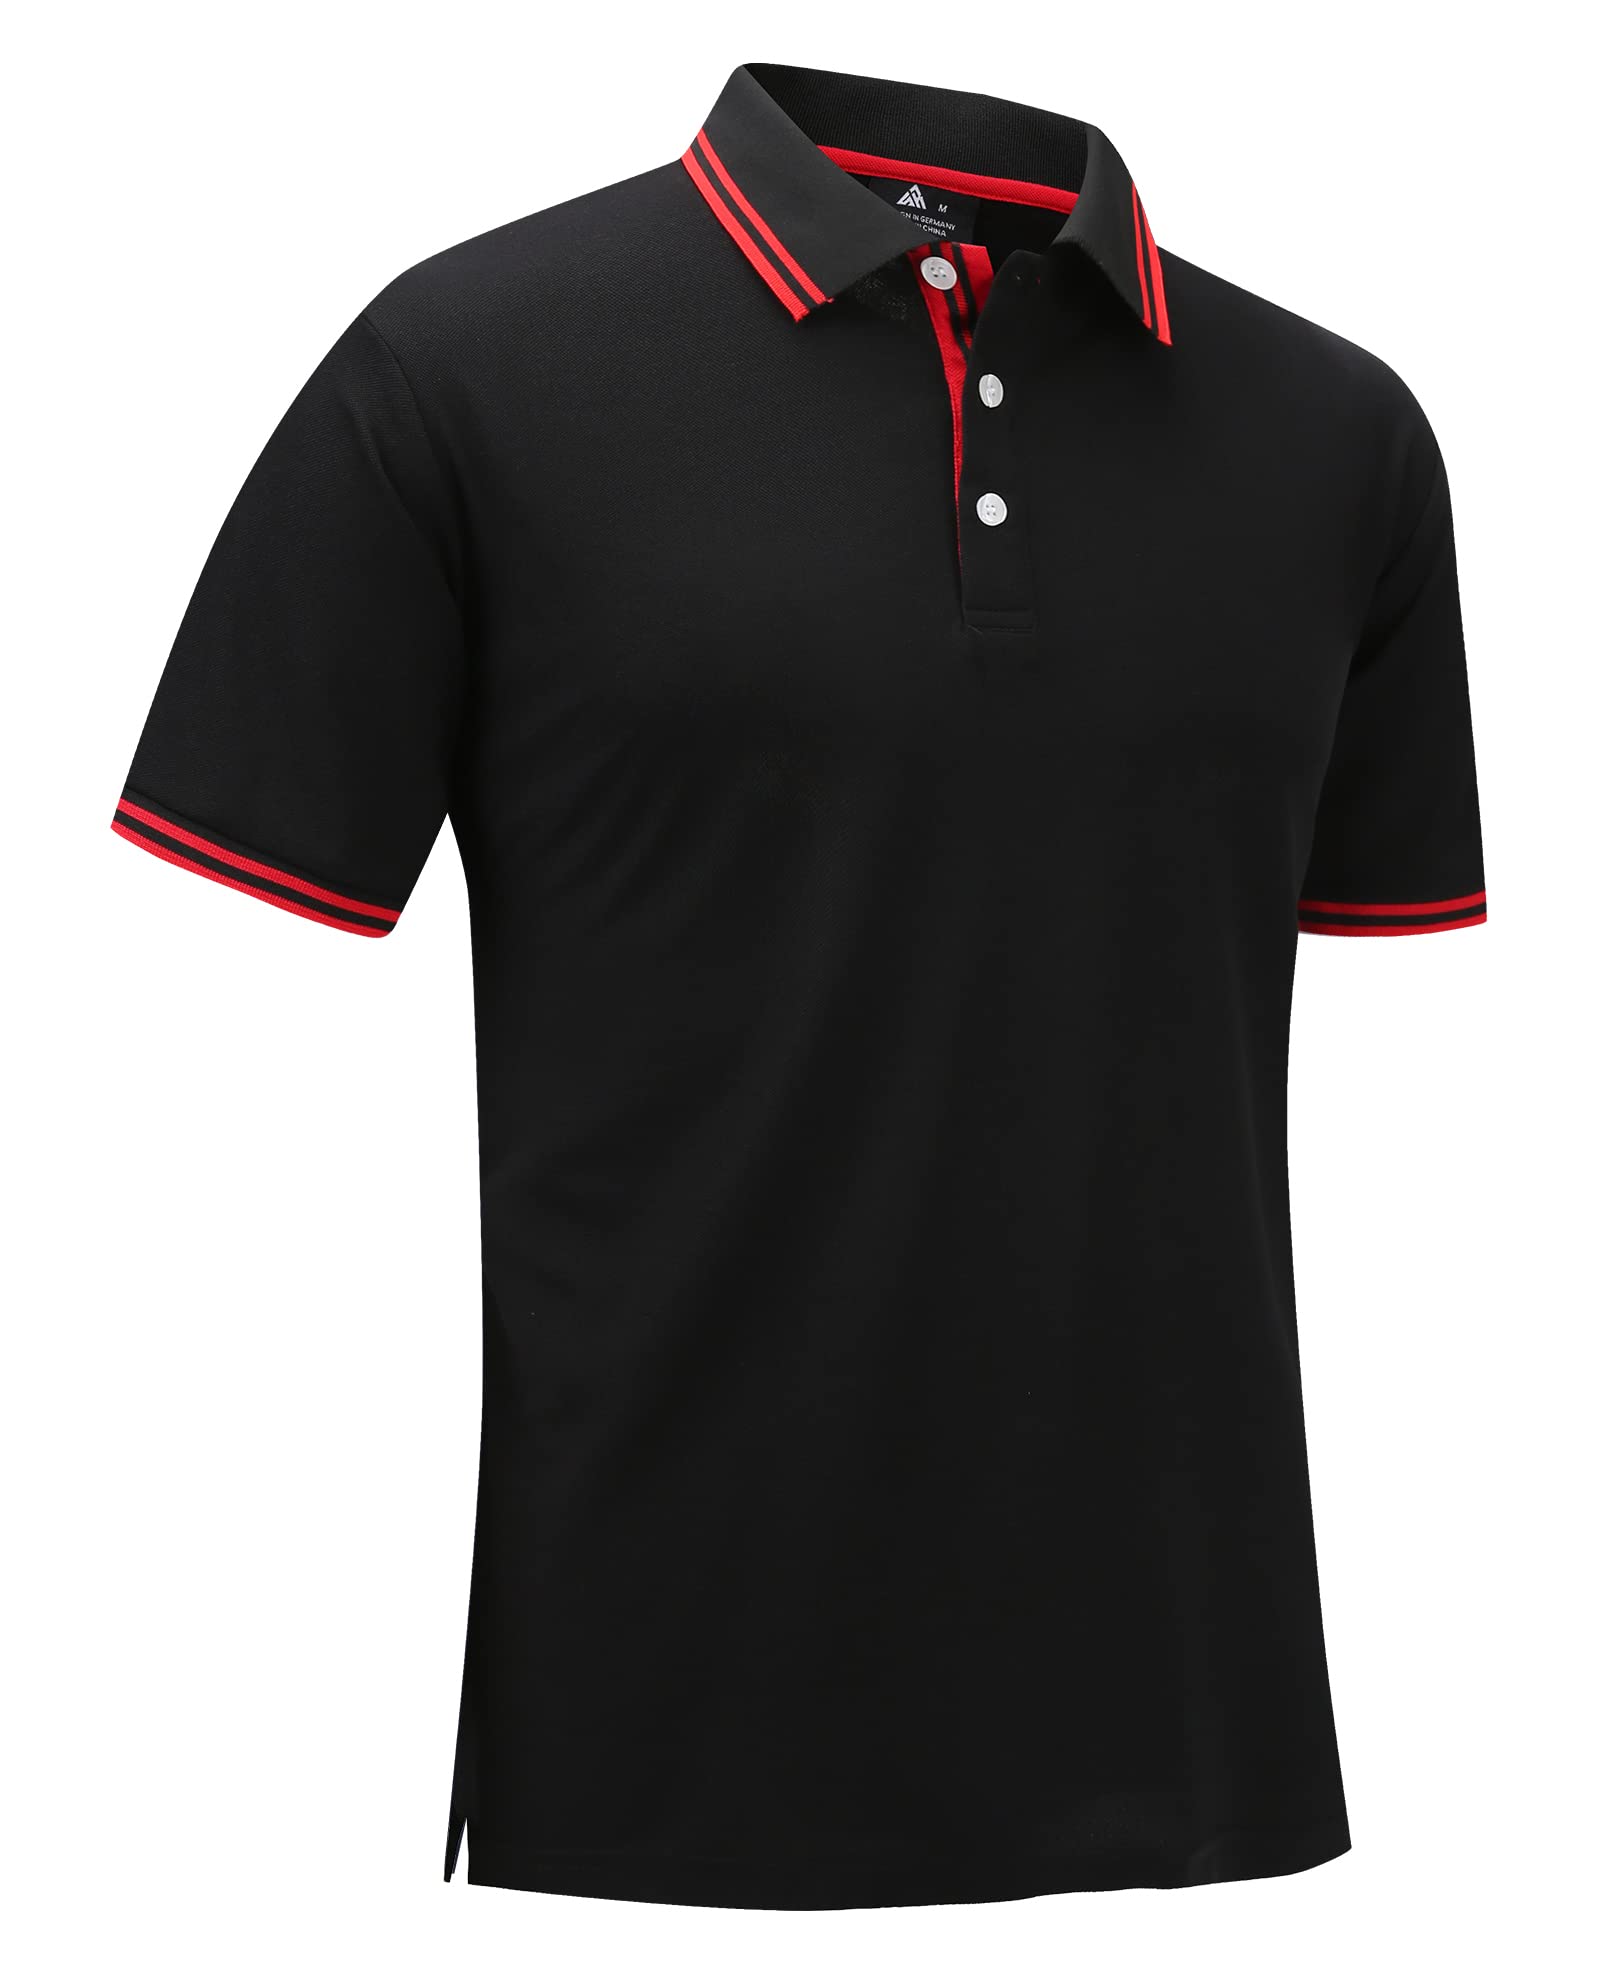 V VALANCH Men's Black Golf Polo Short Sleeve Moisture Wicking Polo Shirts  Collared Shirt Athletic Tennis Tops,Black,L